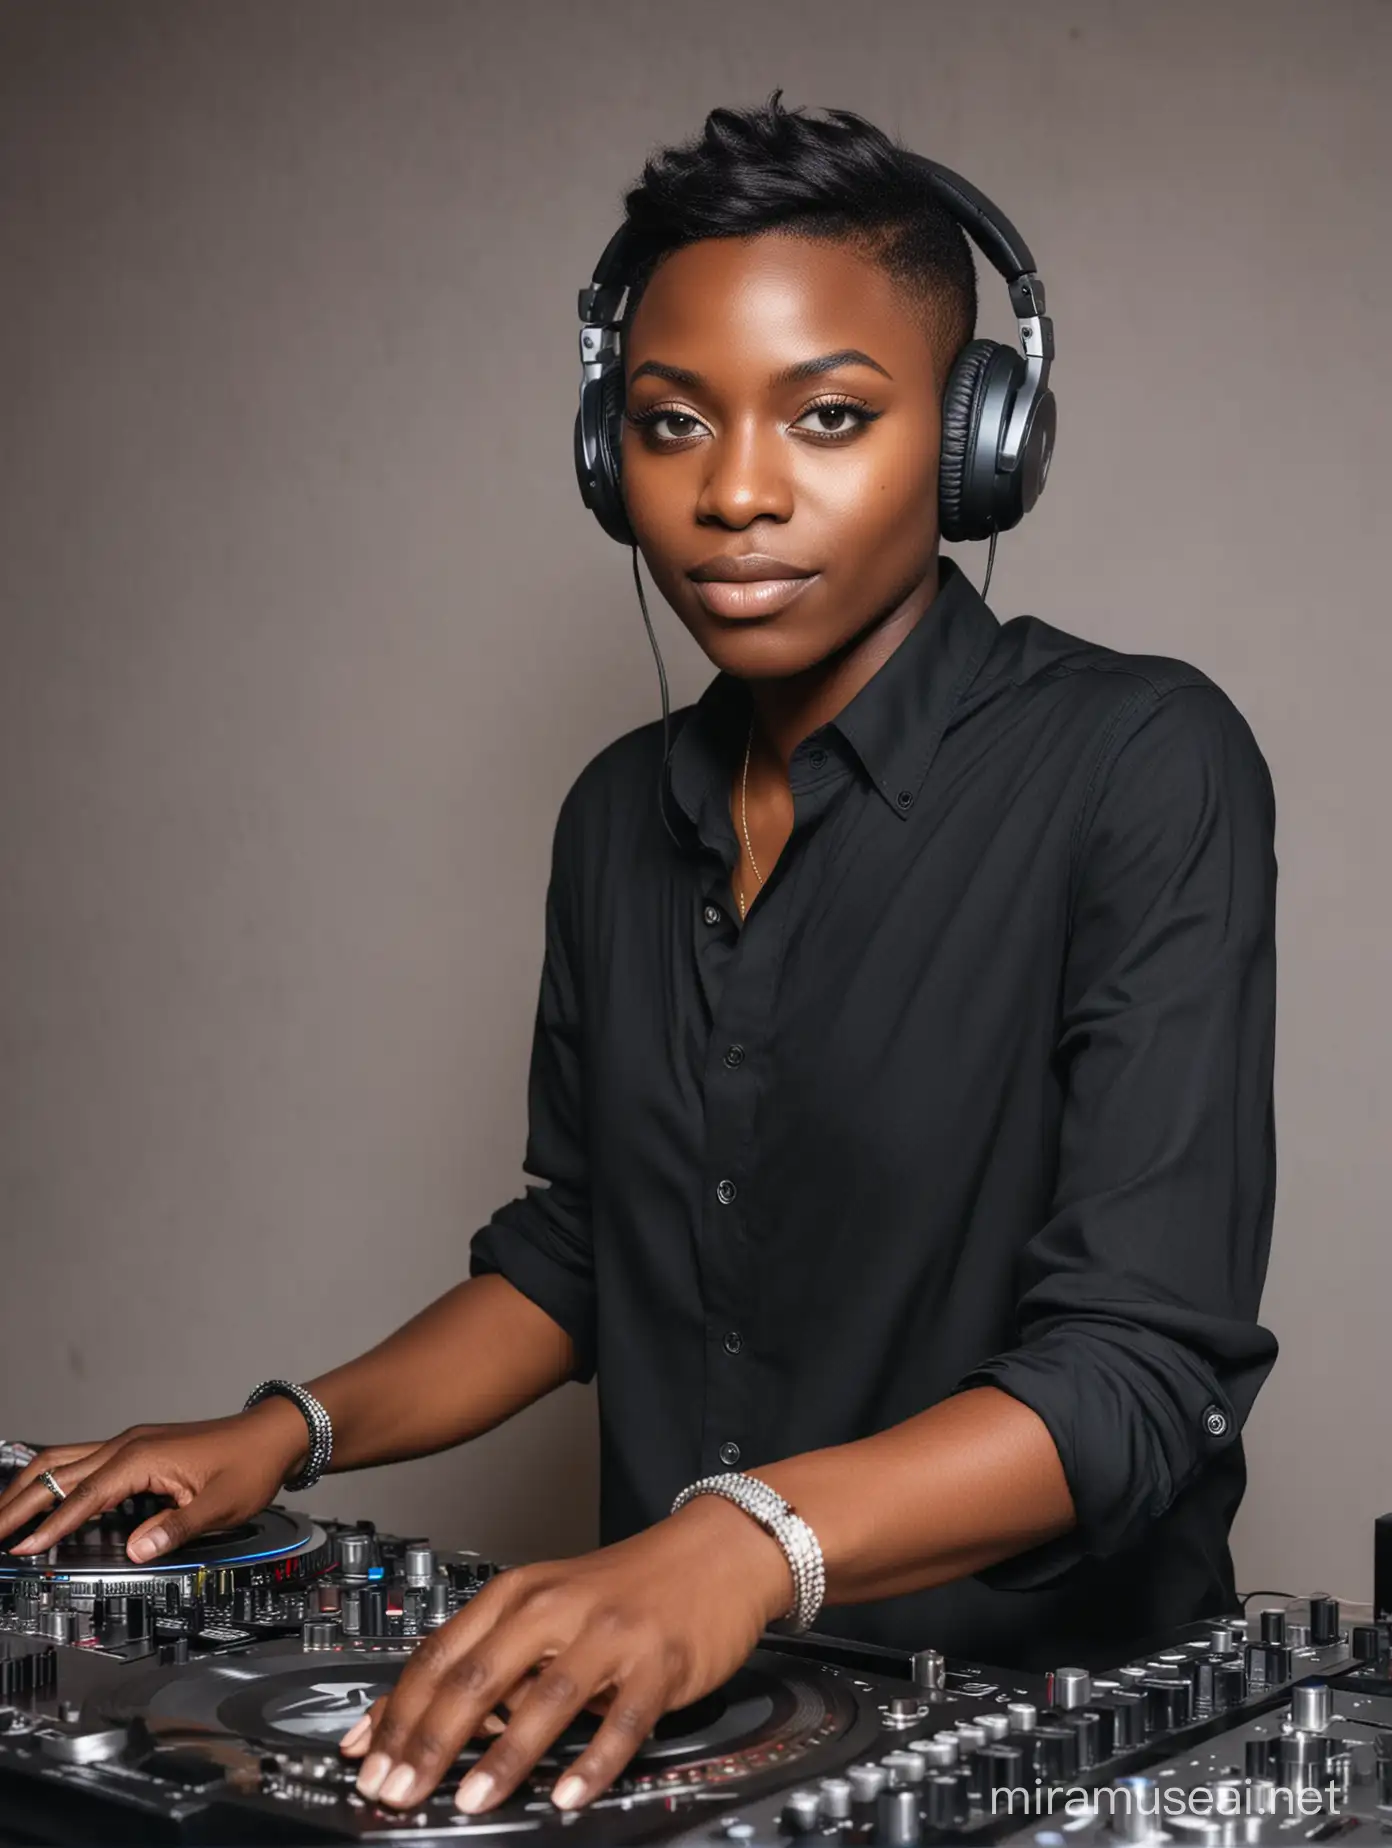 Androgynous Nigerian DJ Spinning Tracks at Vibrant Party